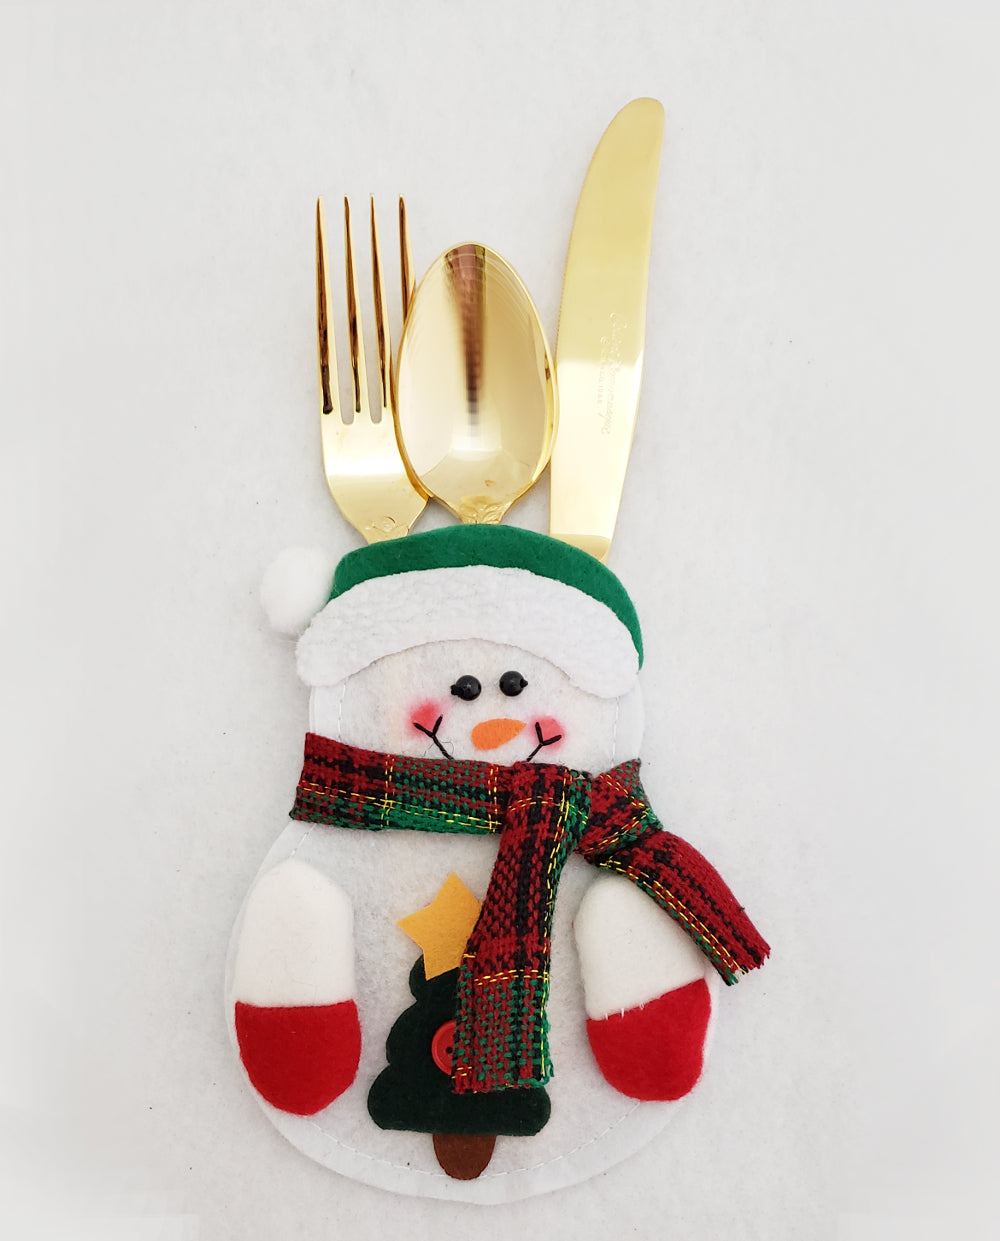 Snowman Flatware Holder - perfect for kids!